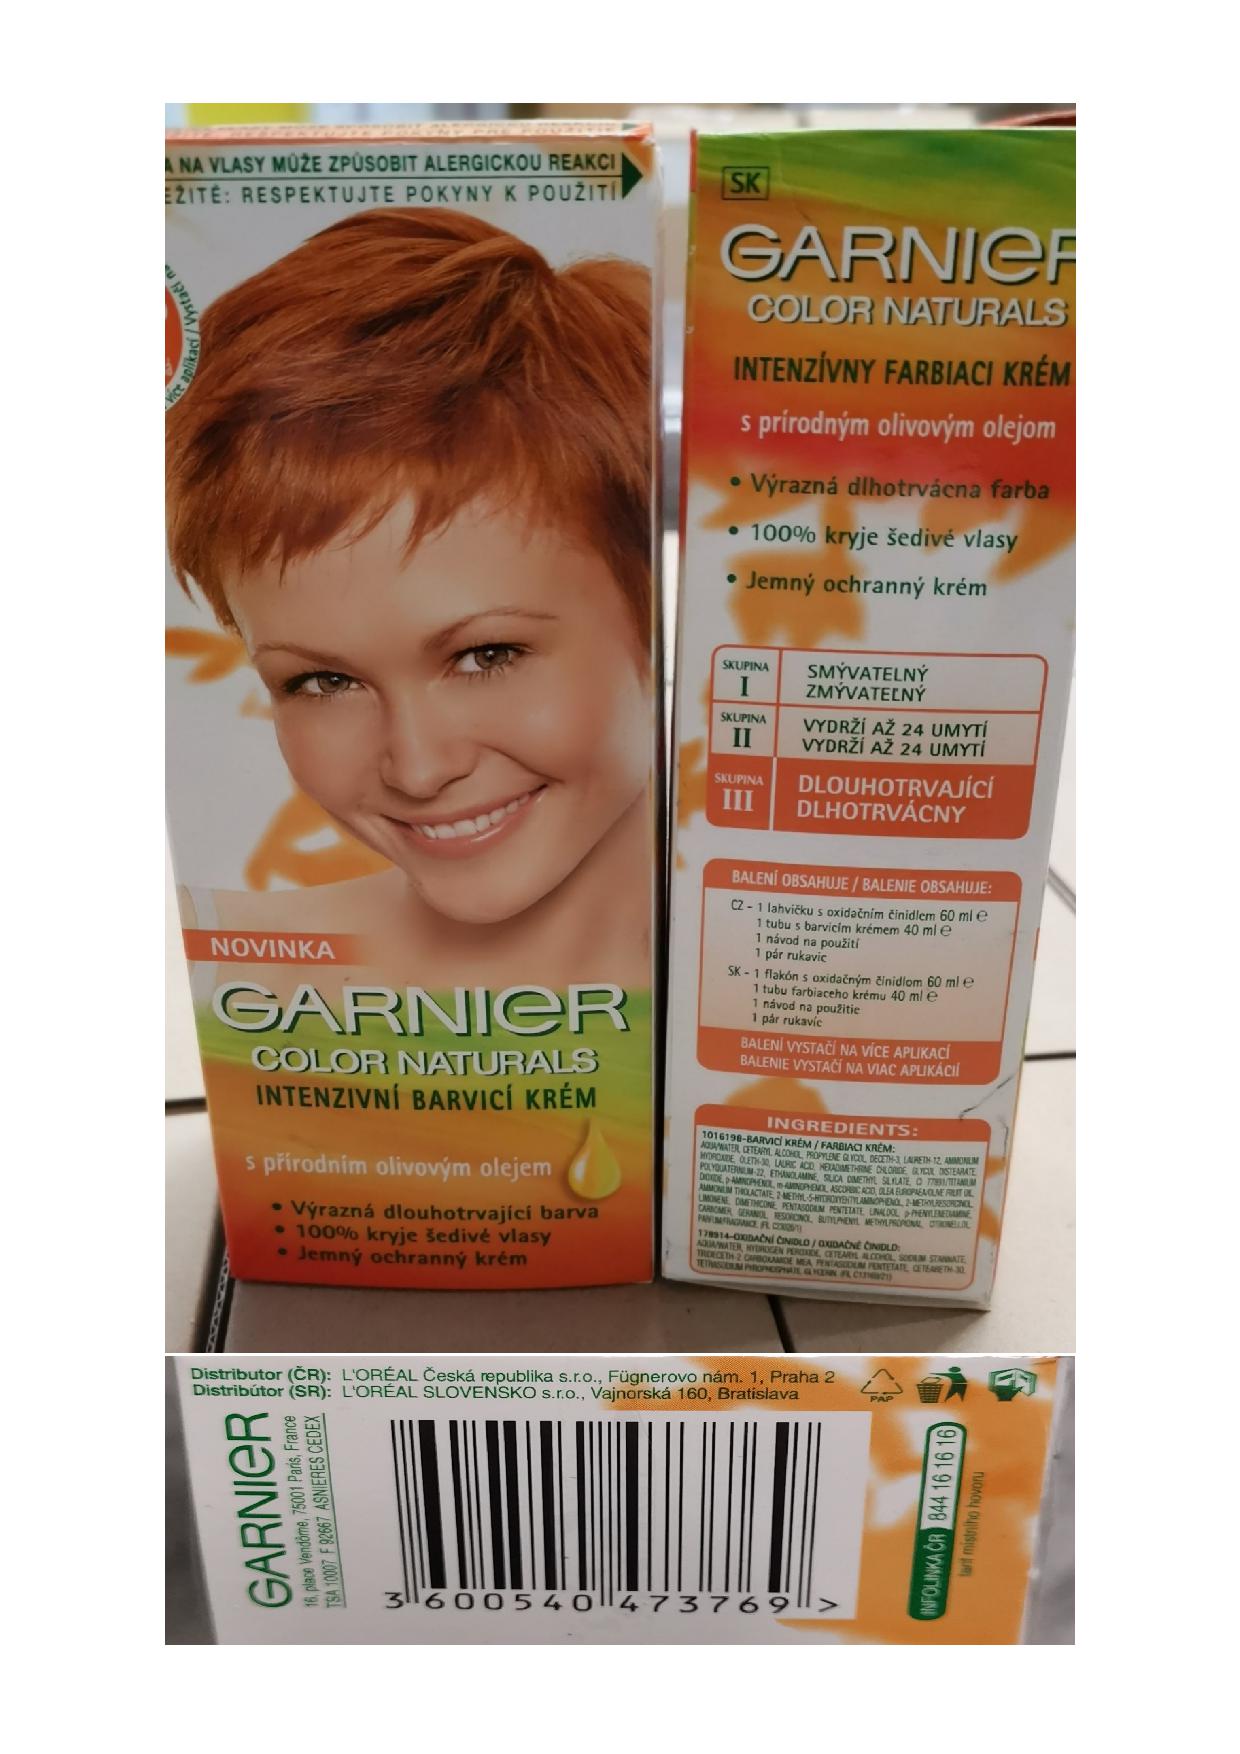 Hair dye ; Garnier ; Garnier colore naturale